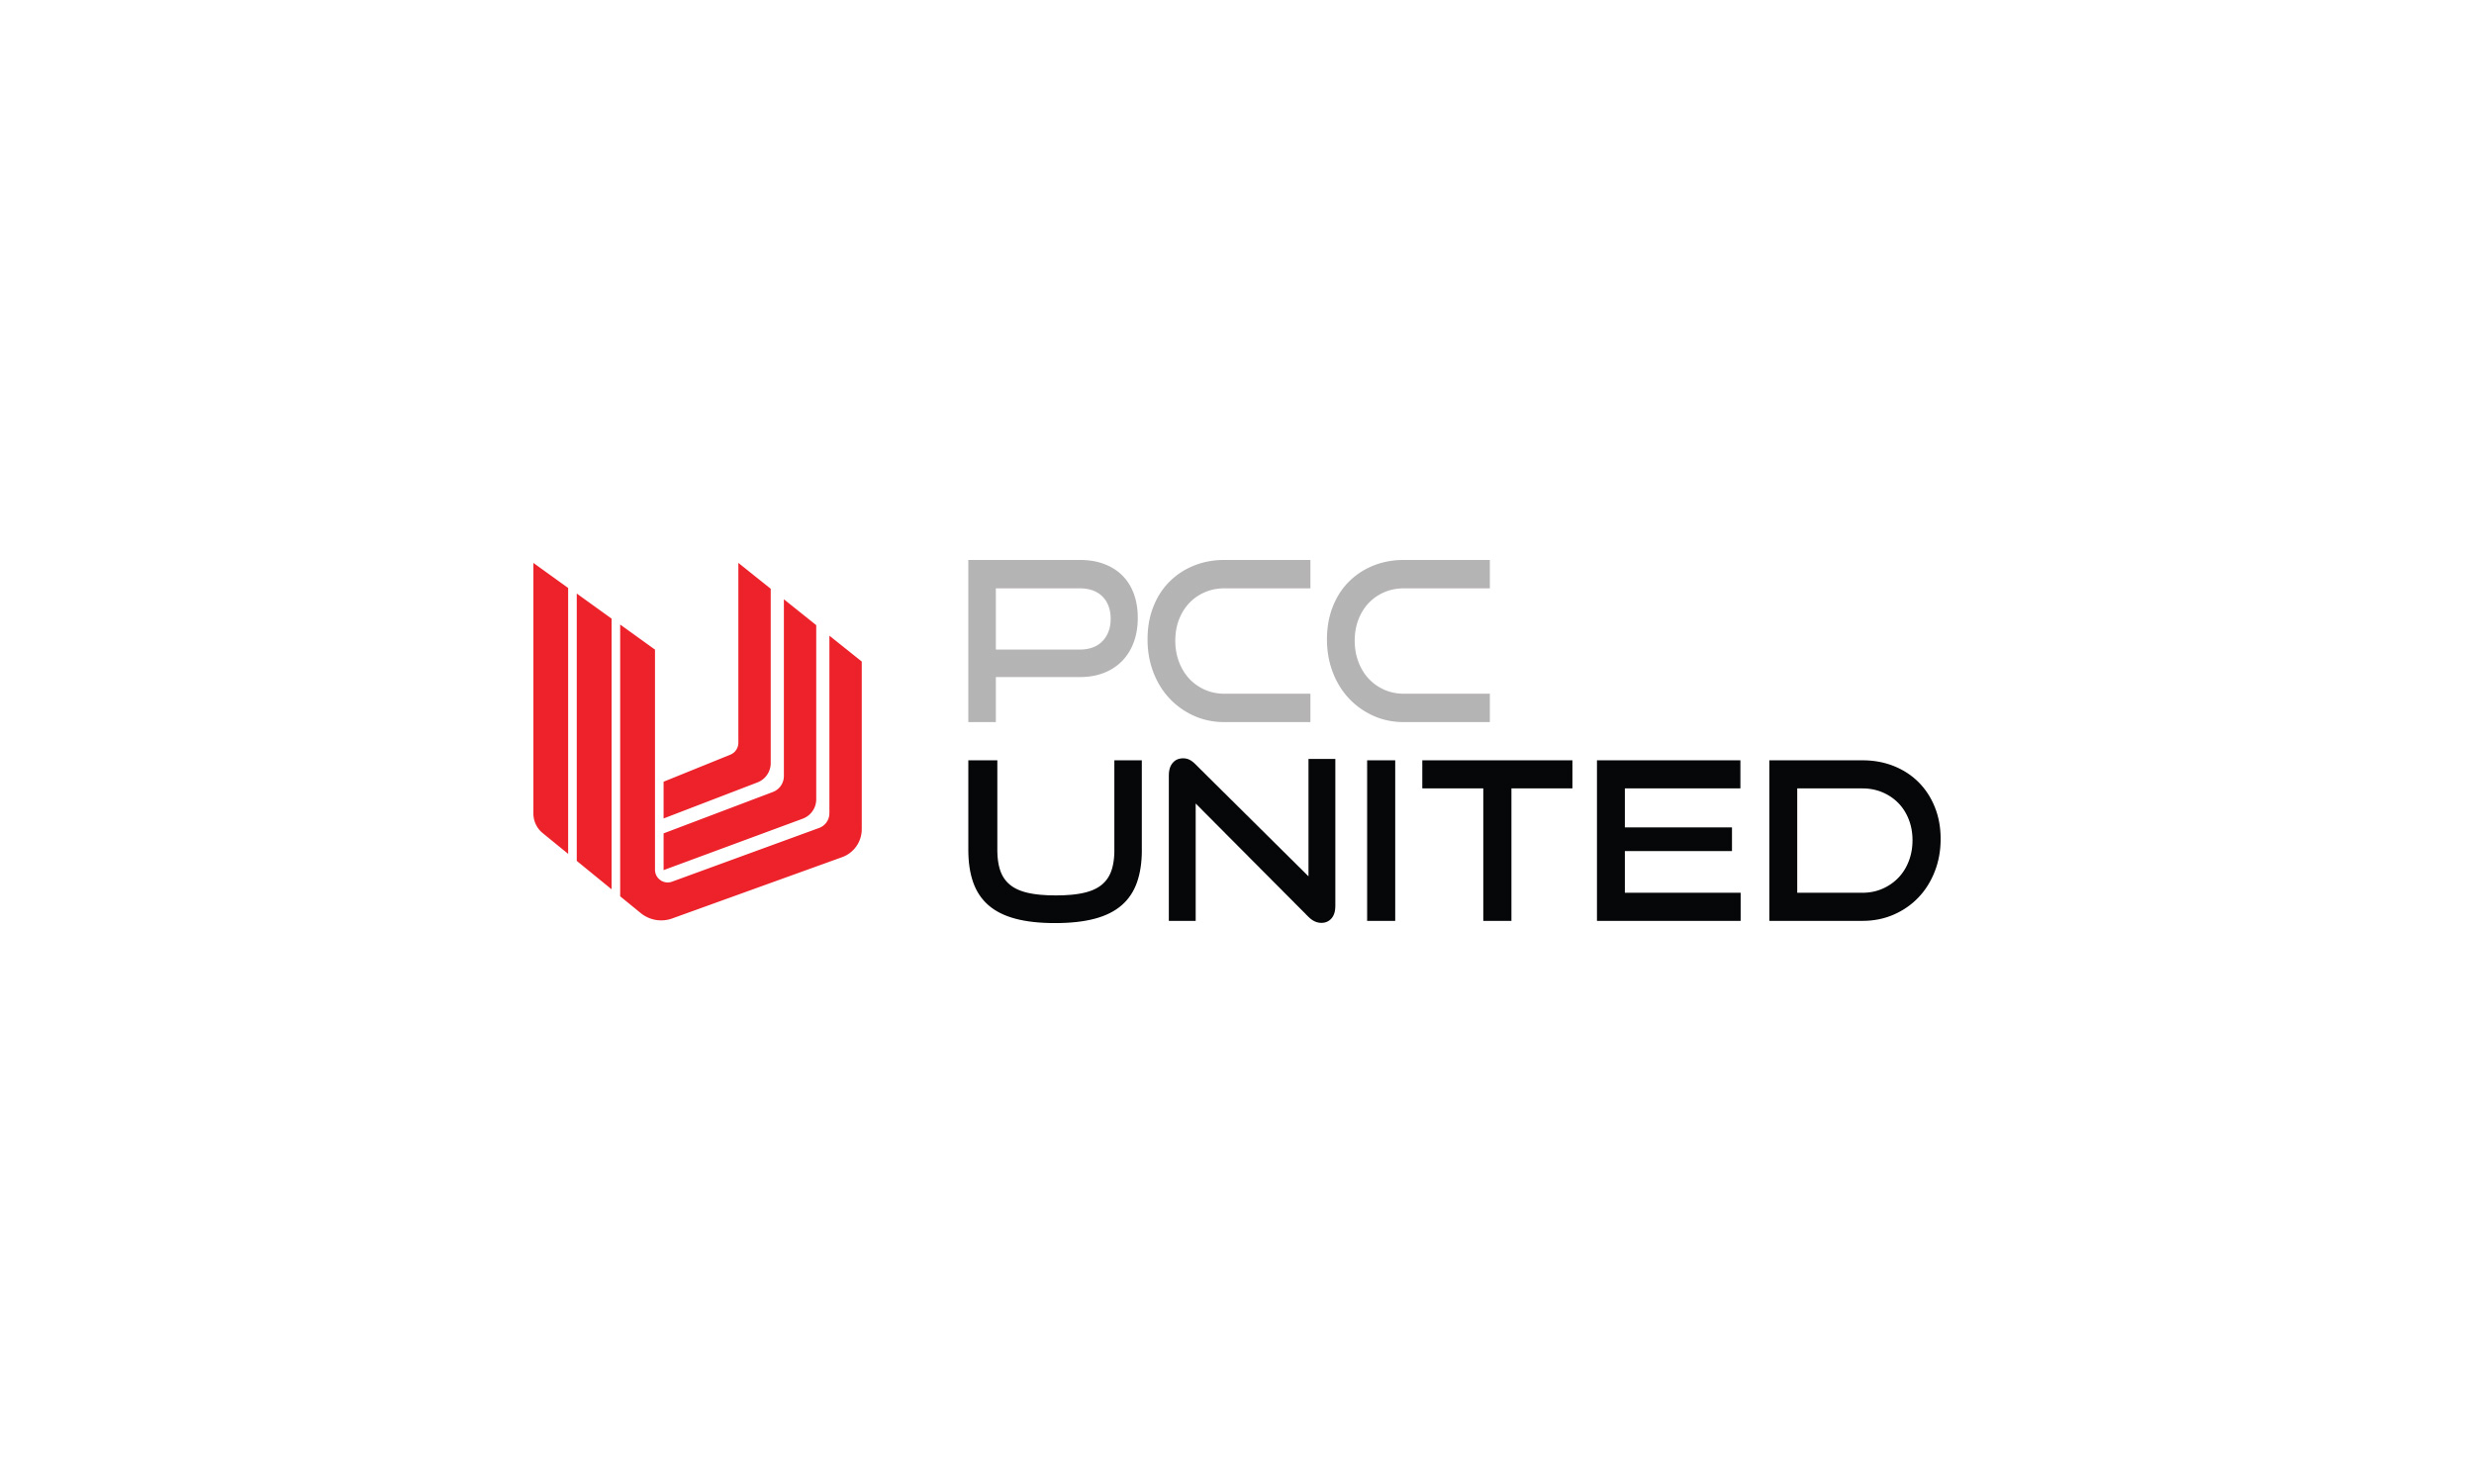 PCC Letter Logo Design on Black Background. PCC Creative Initials Letter  Logo Concept Stock Vector - Illustration of flame, pcccircle: 242586212